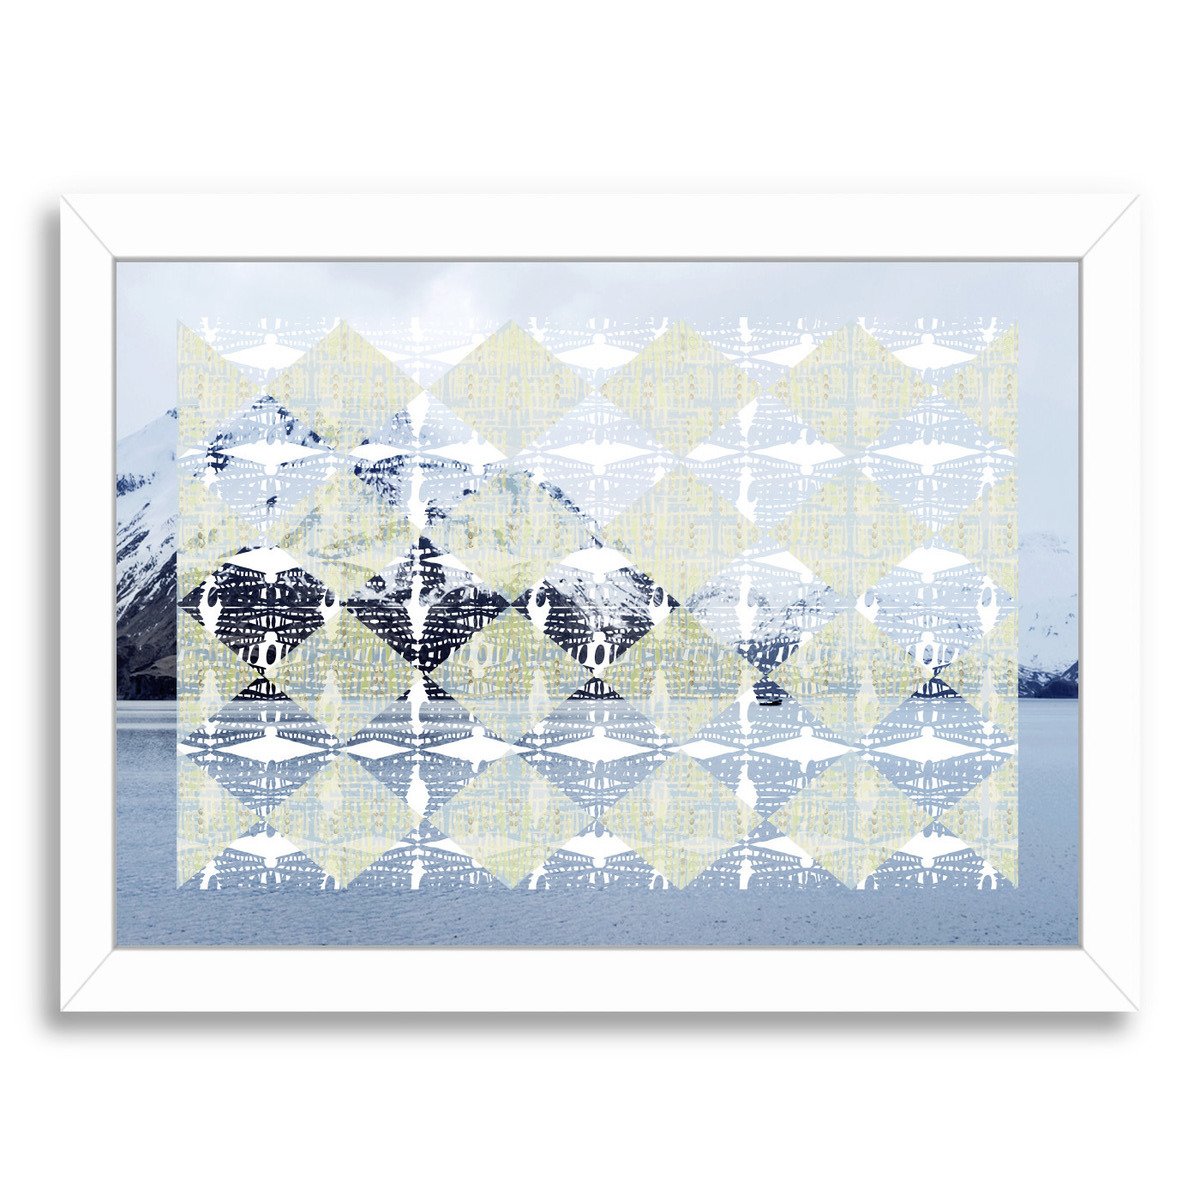 Patterns In Nature I by Hope Bainbridge - Framed Print - Americanflat